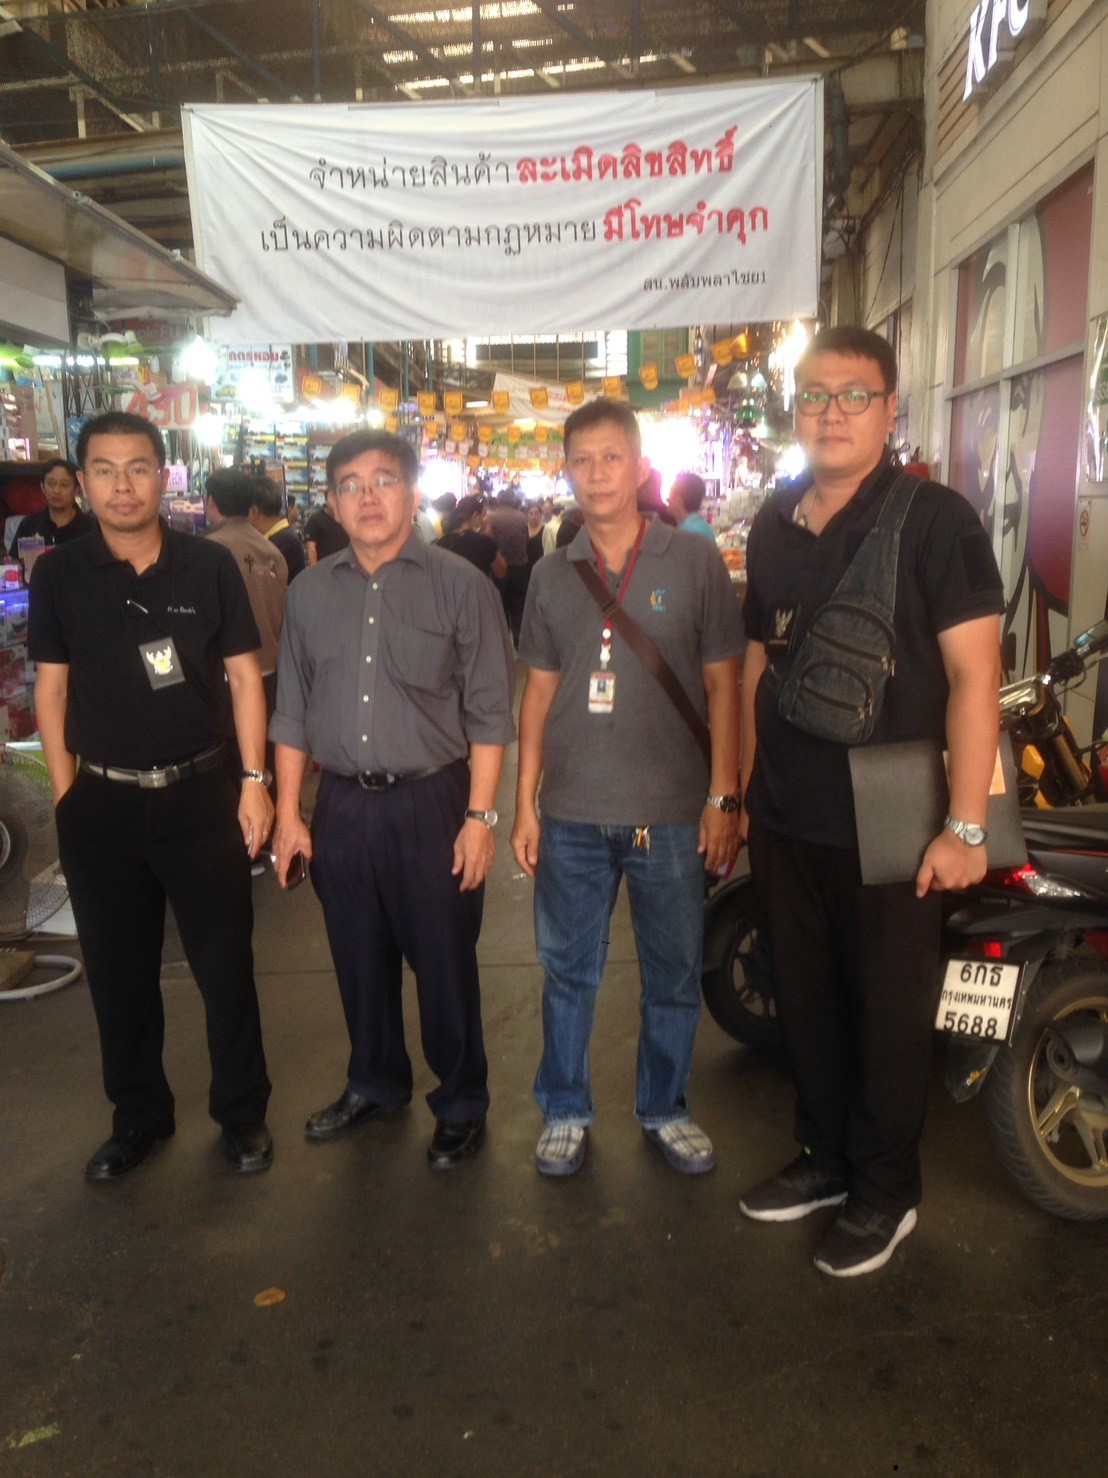 No Infringement at Khlong Thom Market